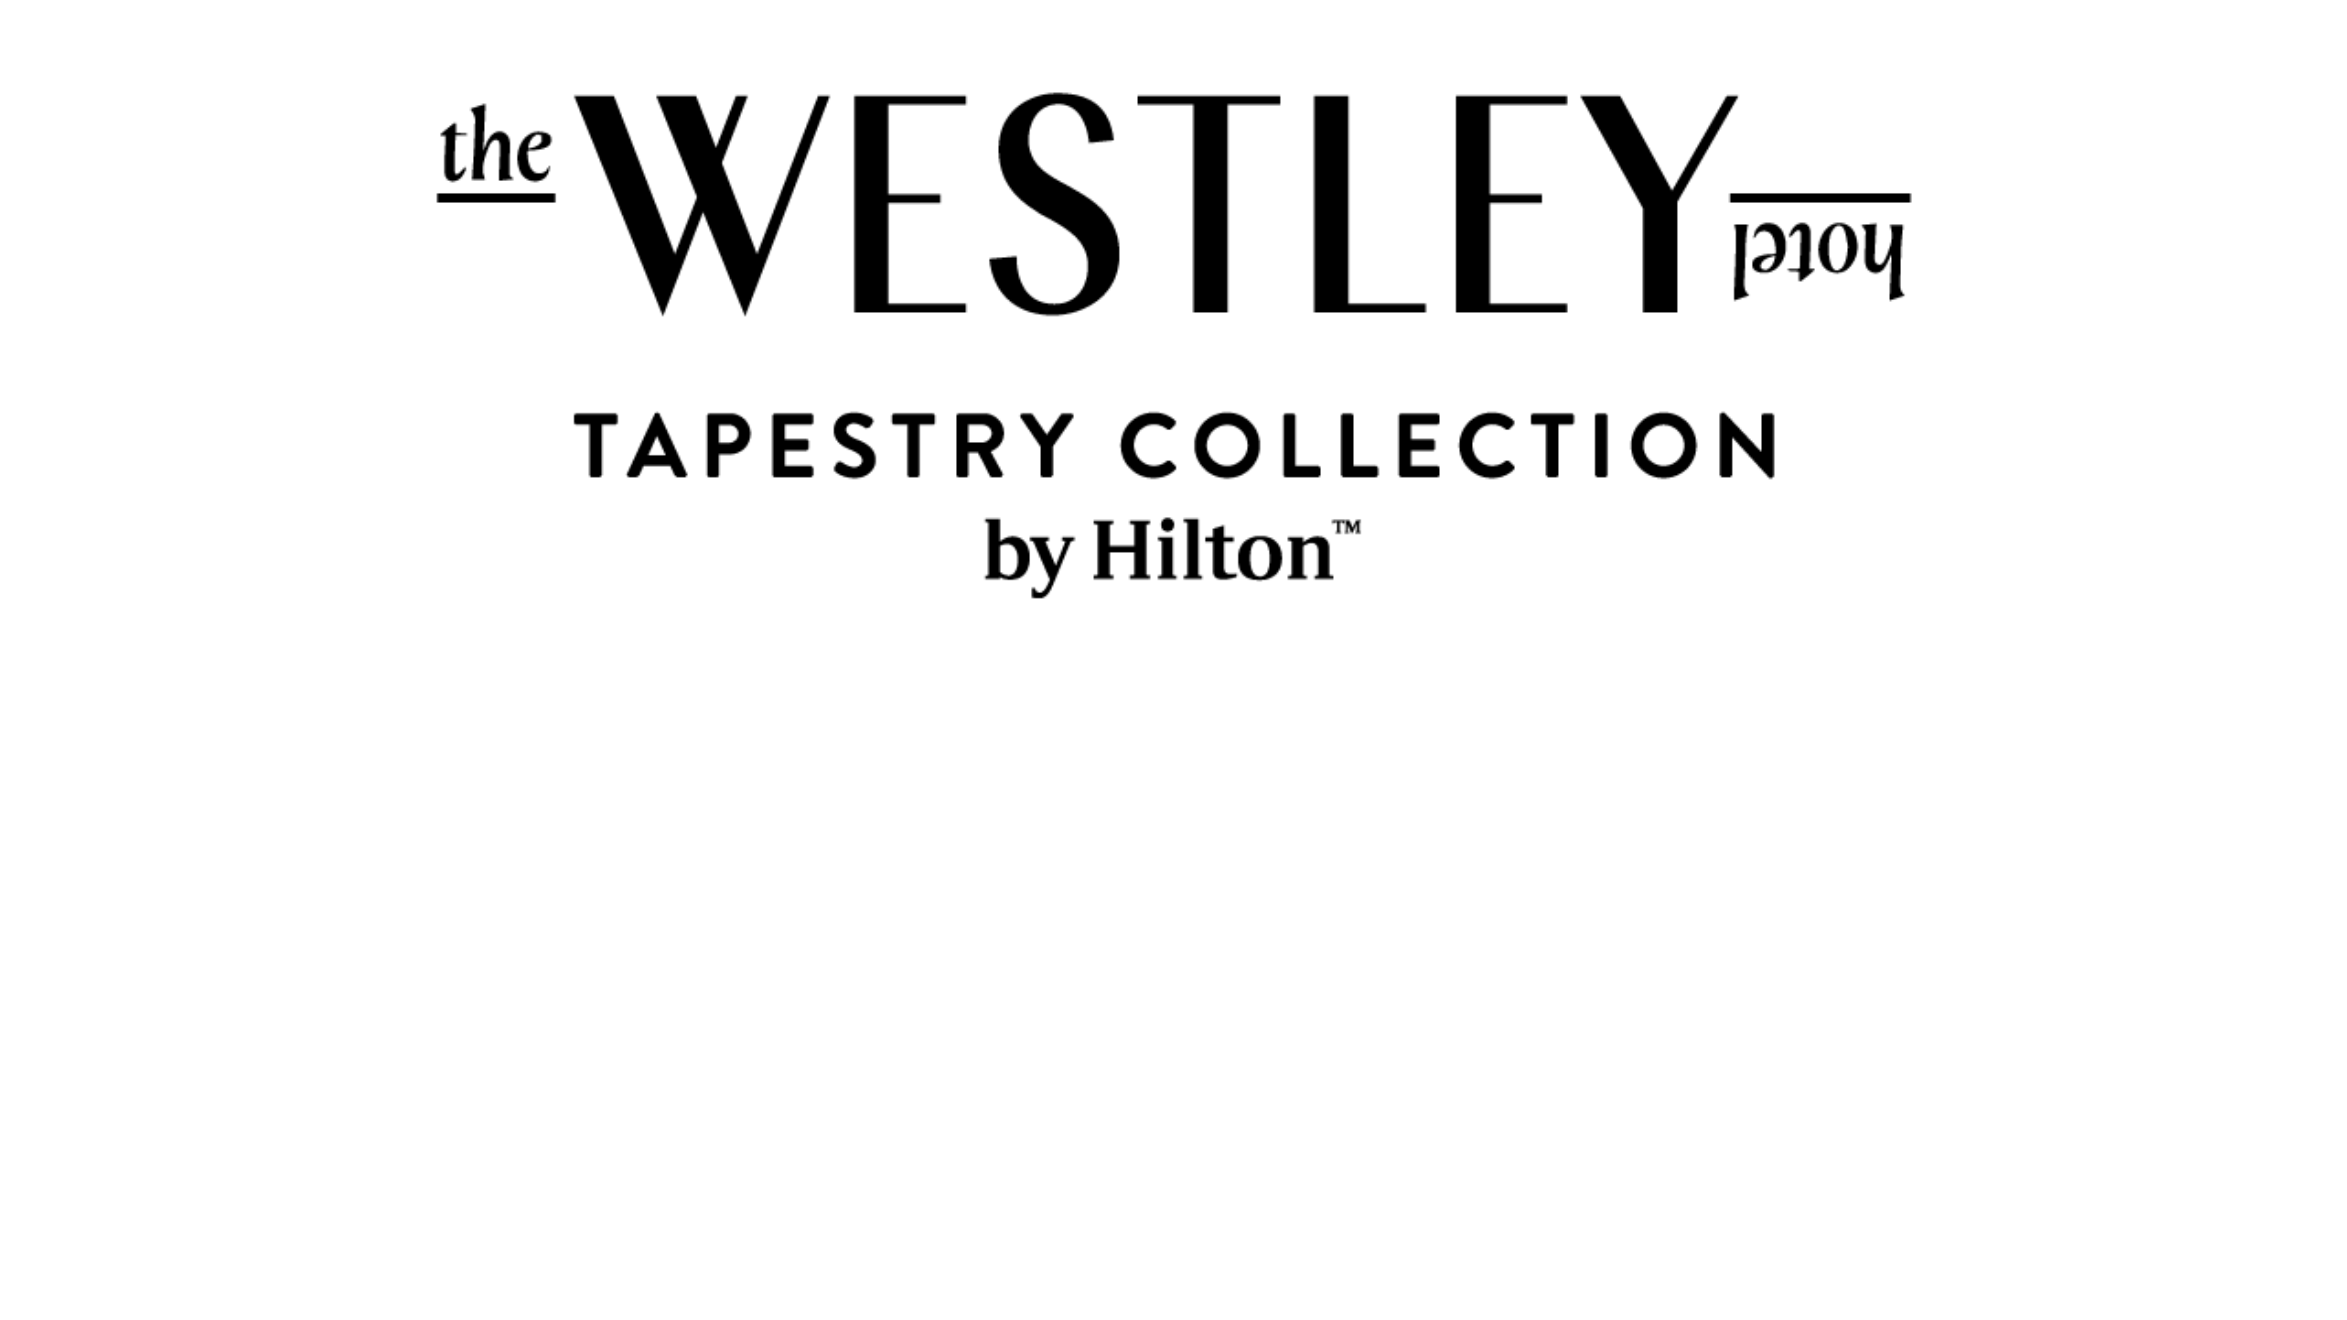 The Westley logo